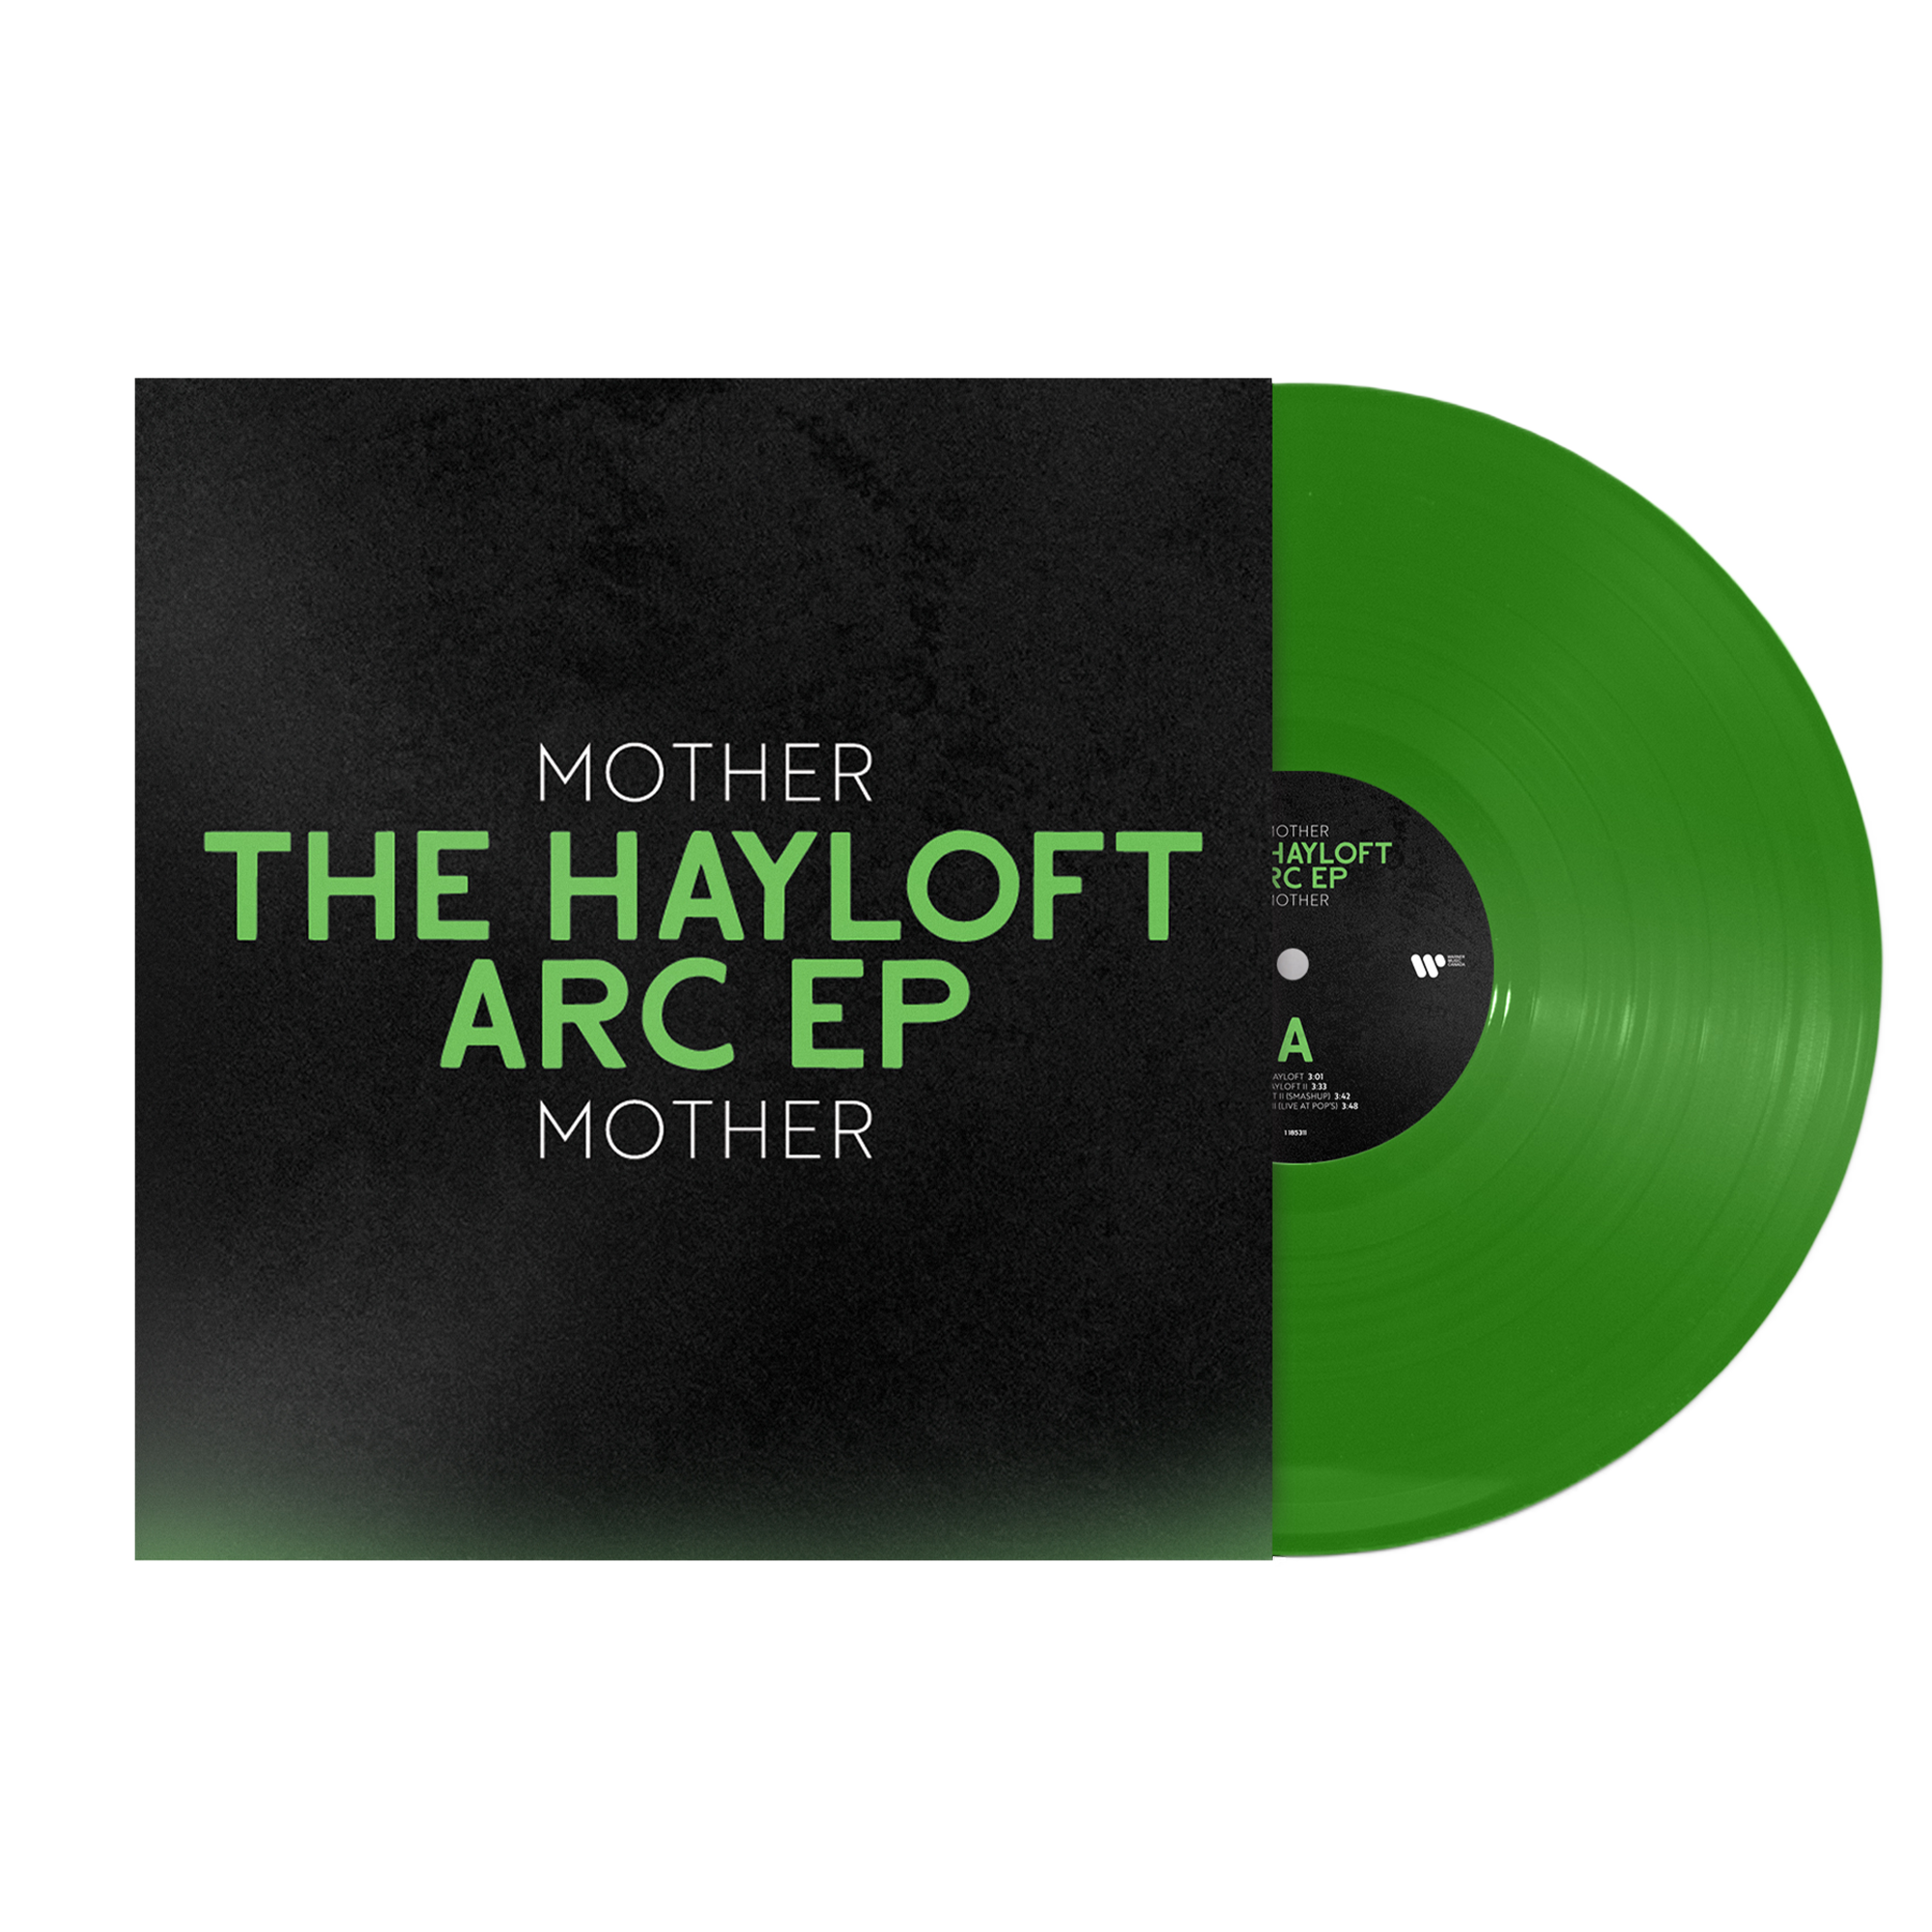 The Hayloft Arc EP